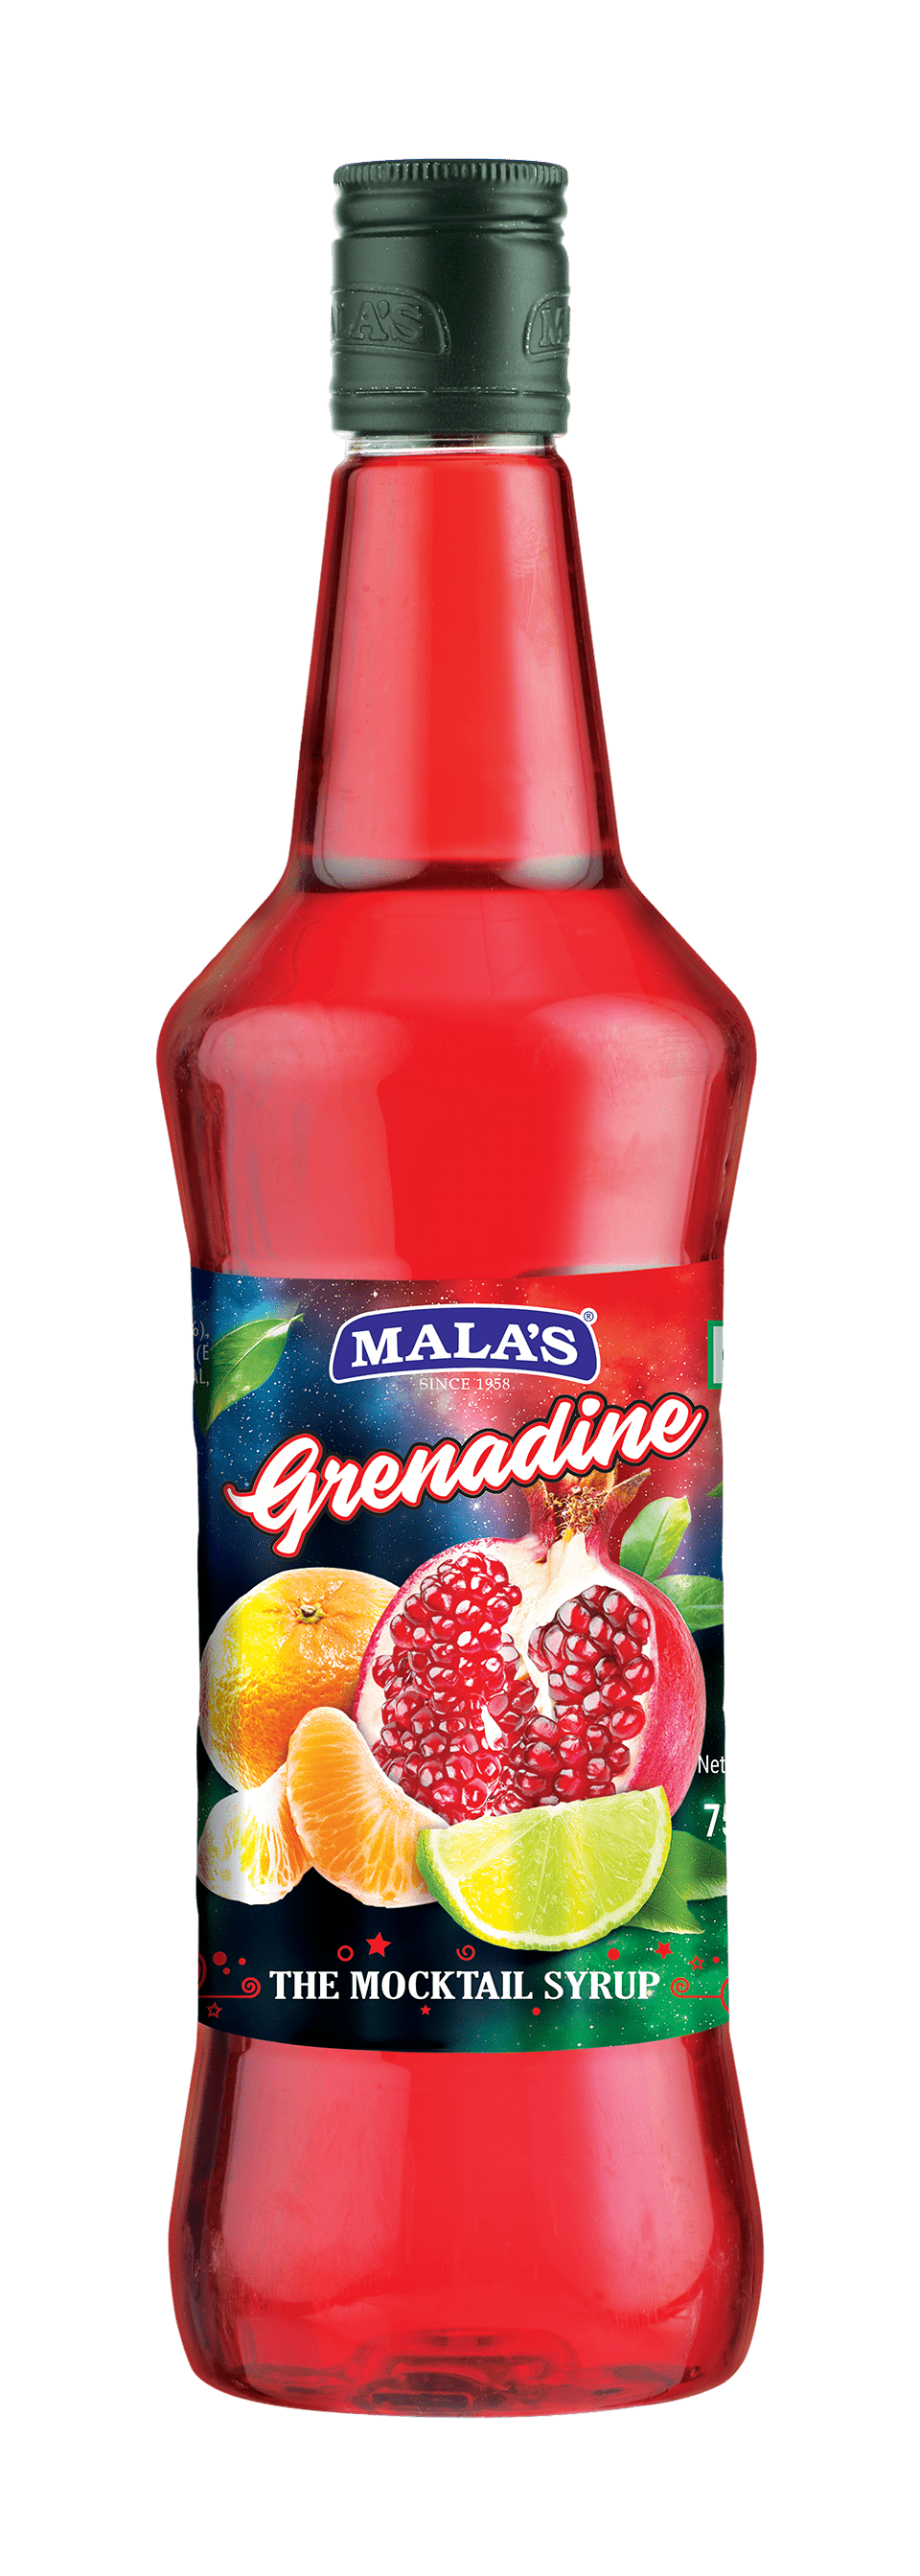 Mala's Granadine Cordial Syrup 750 ml for Mocktail & Cocktail MOCKTAIL Mala's